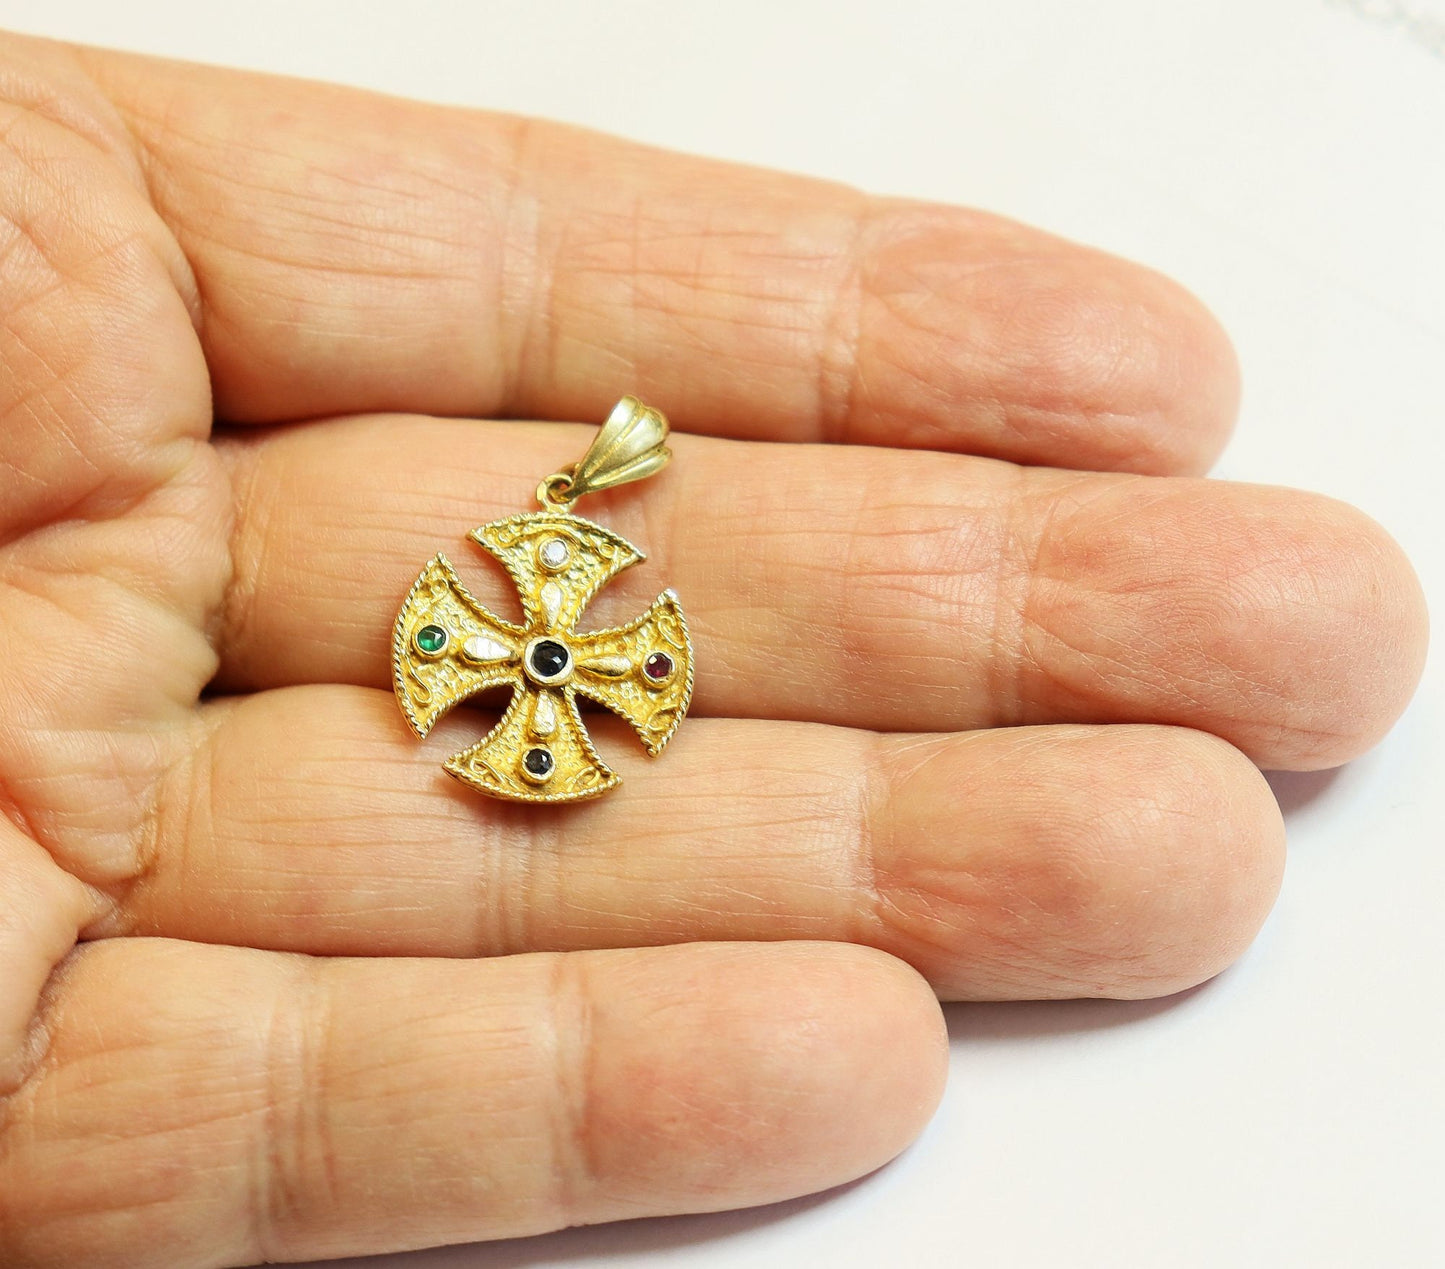 14 K. Gold Malta Cross Pendant Medal Studded w Ruby, Diamond, Sapphire and Emerald. Handmade Jewelry 1950's